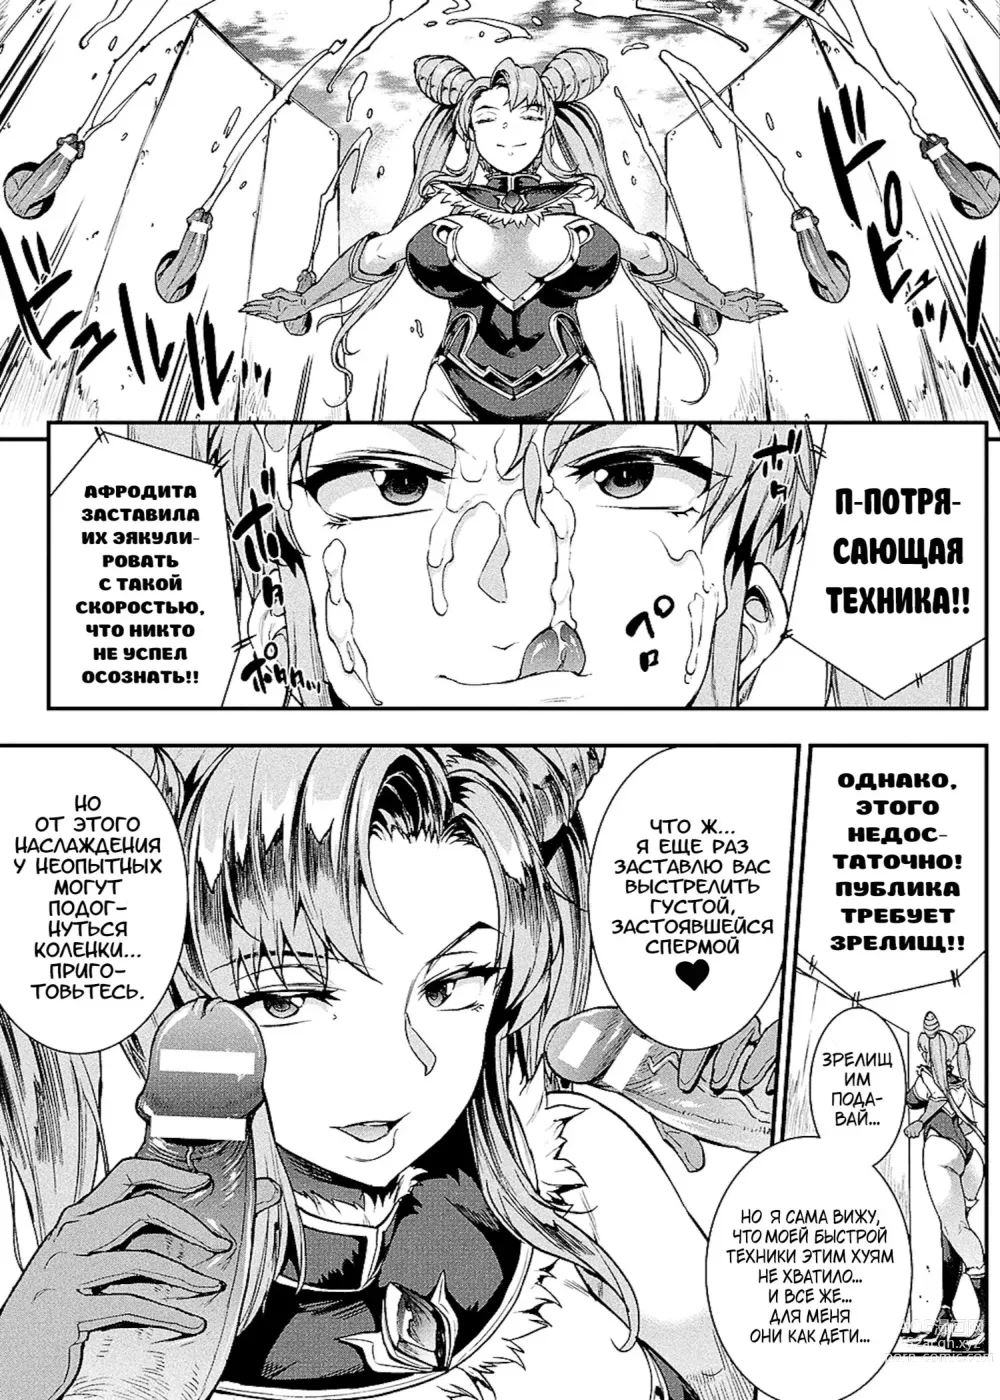 Page 31 of manga Raikou Shinki Igis Magia II -PANDRA saga 3rd ignition-